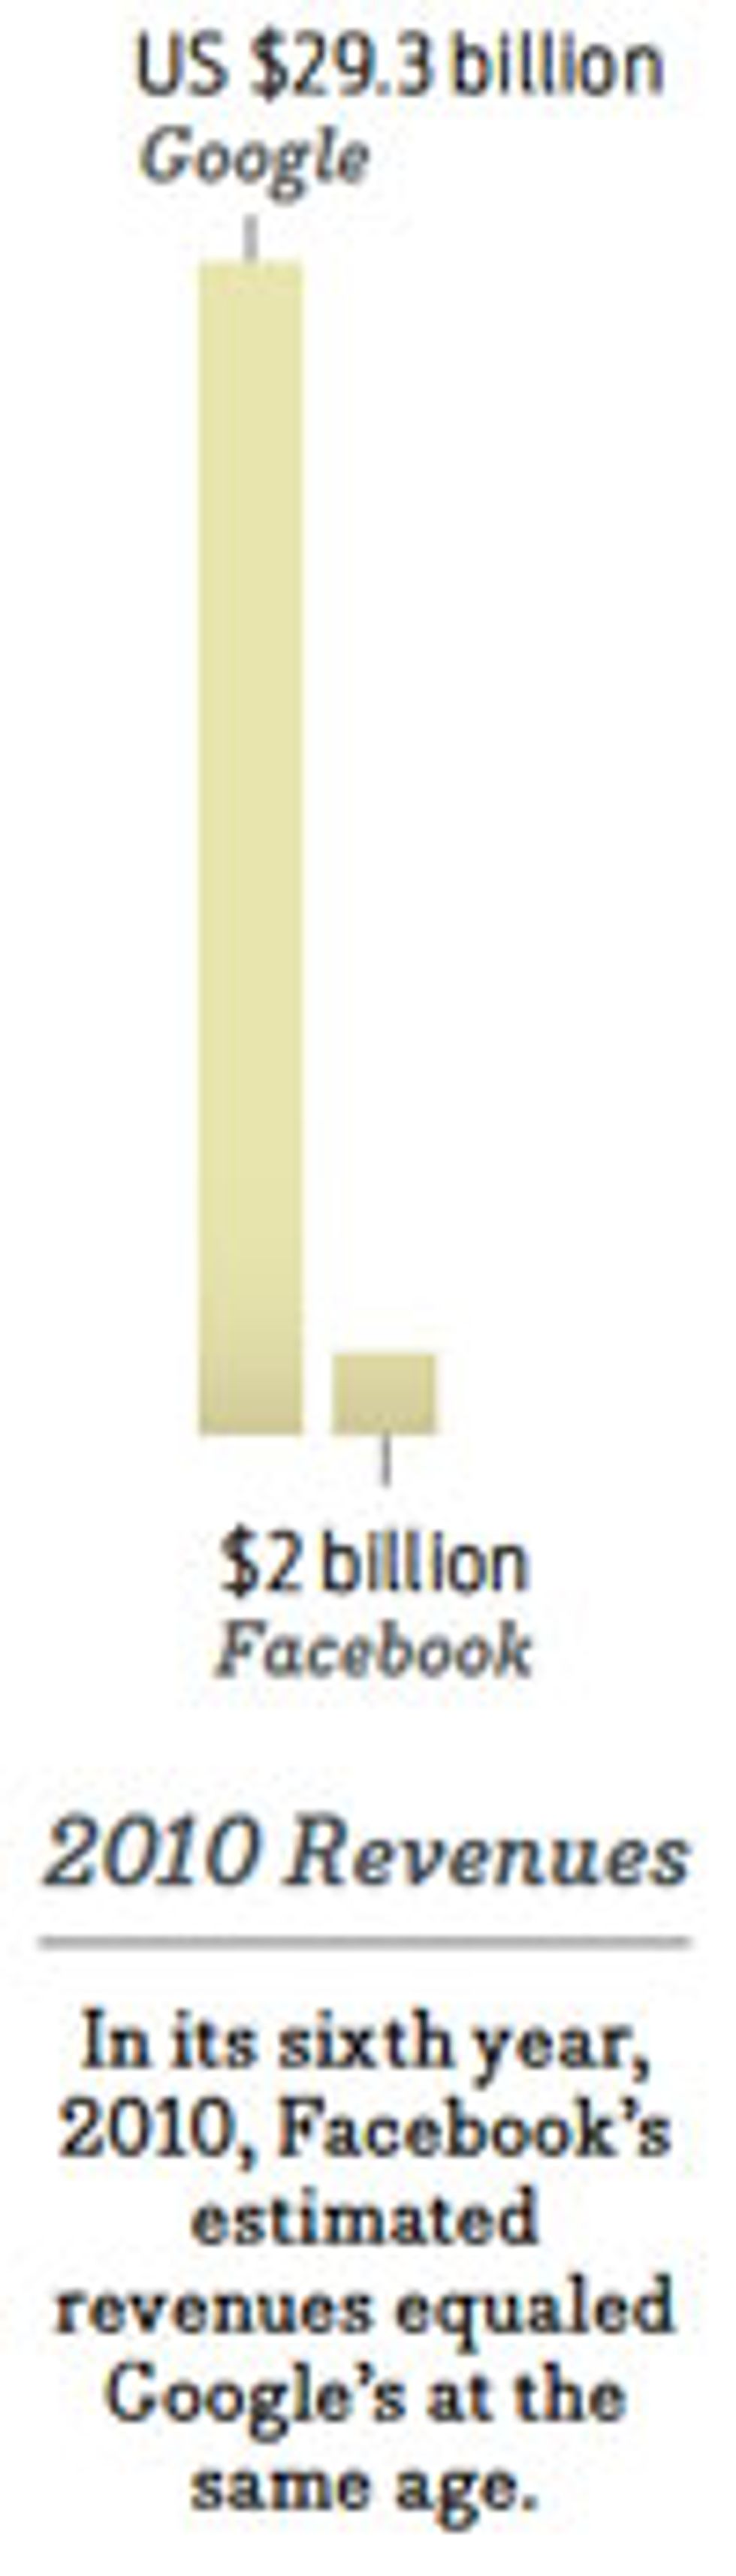 2010 revenues graph